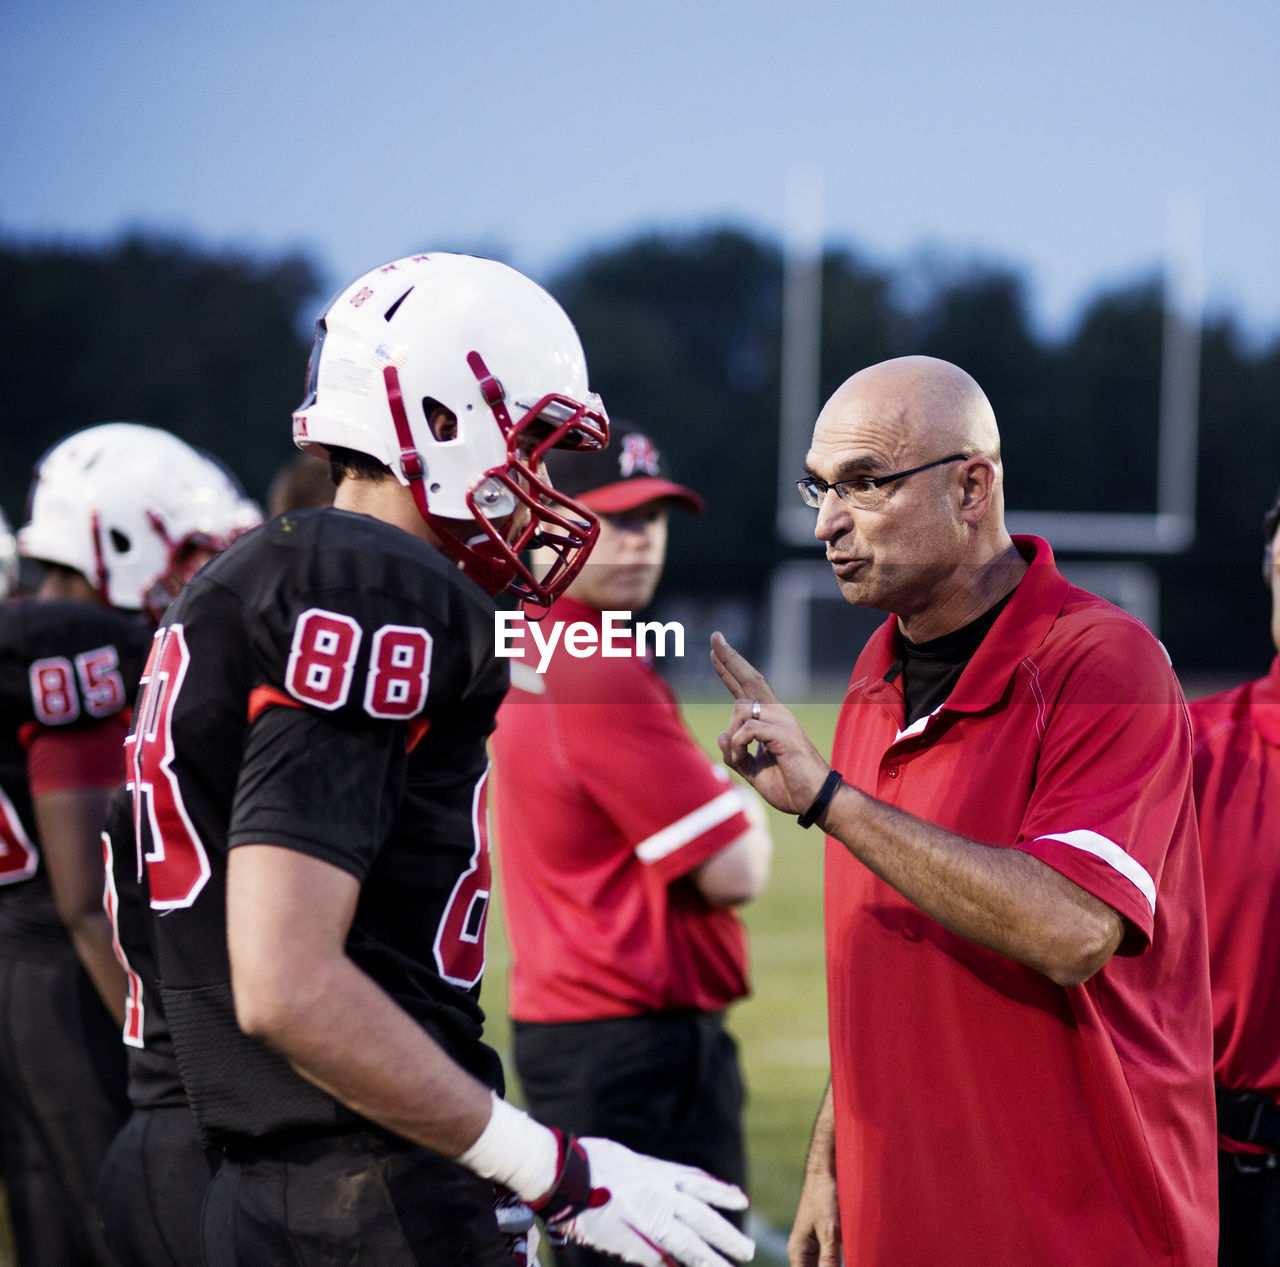 Coach explaining american football players on field